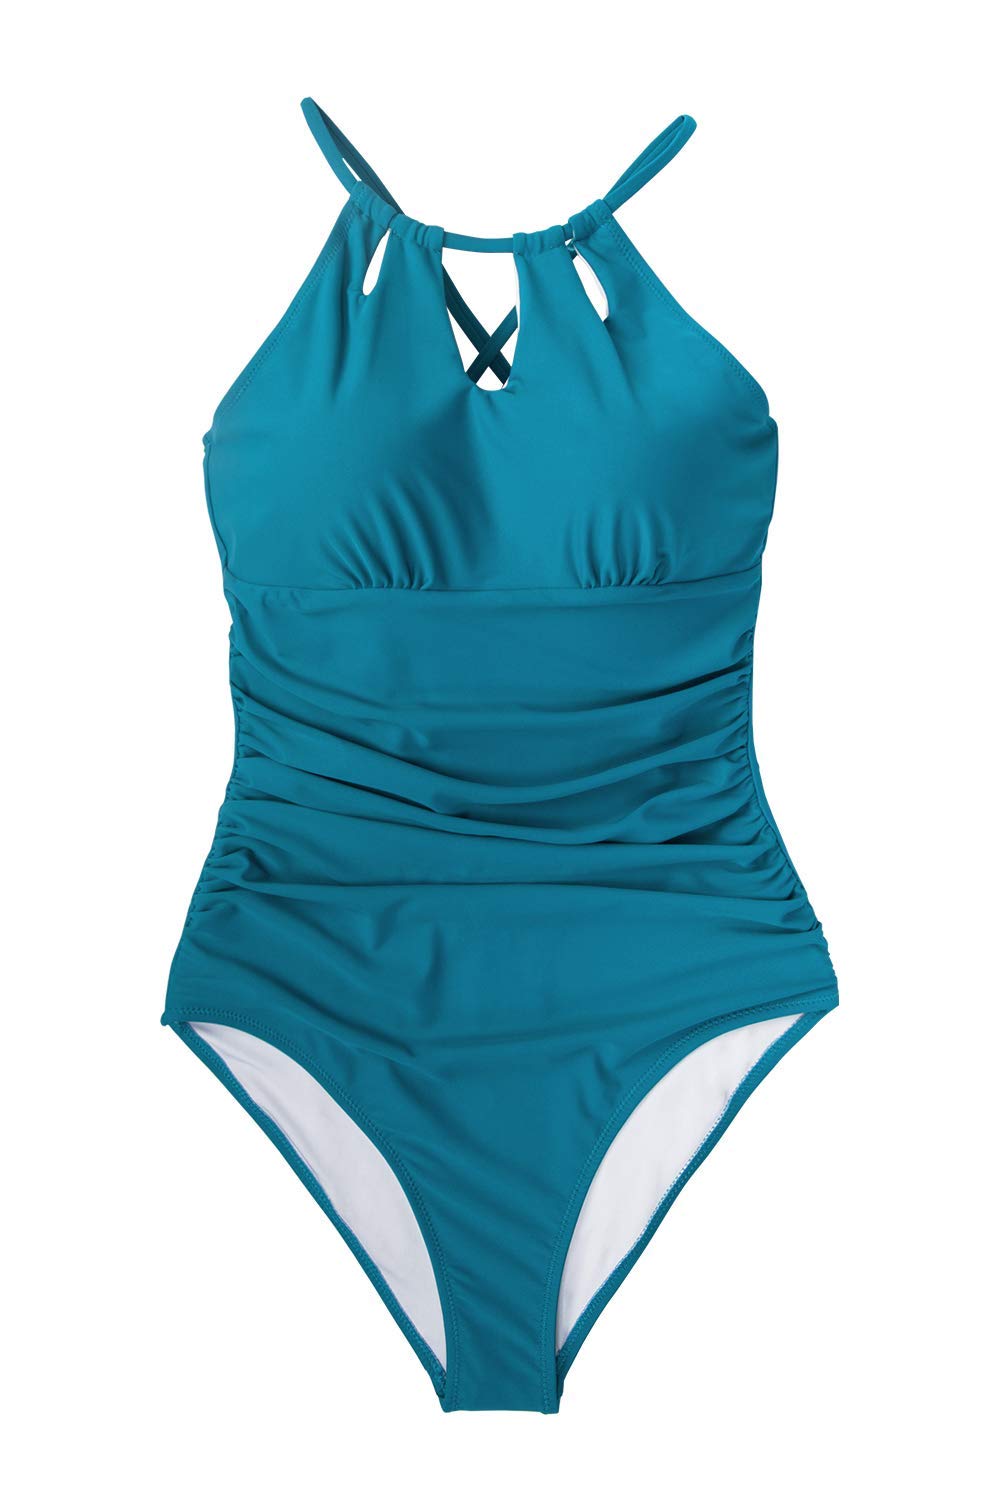 CUPSHE Women's One Piece Swimsuit High Neck Tummy Control Swimwear Bathing Suit Gulf Breeze White Sleeveless Tassel Hem Cover Up